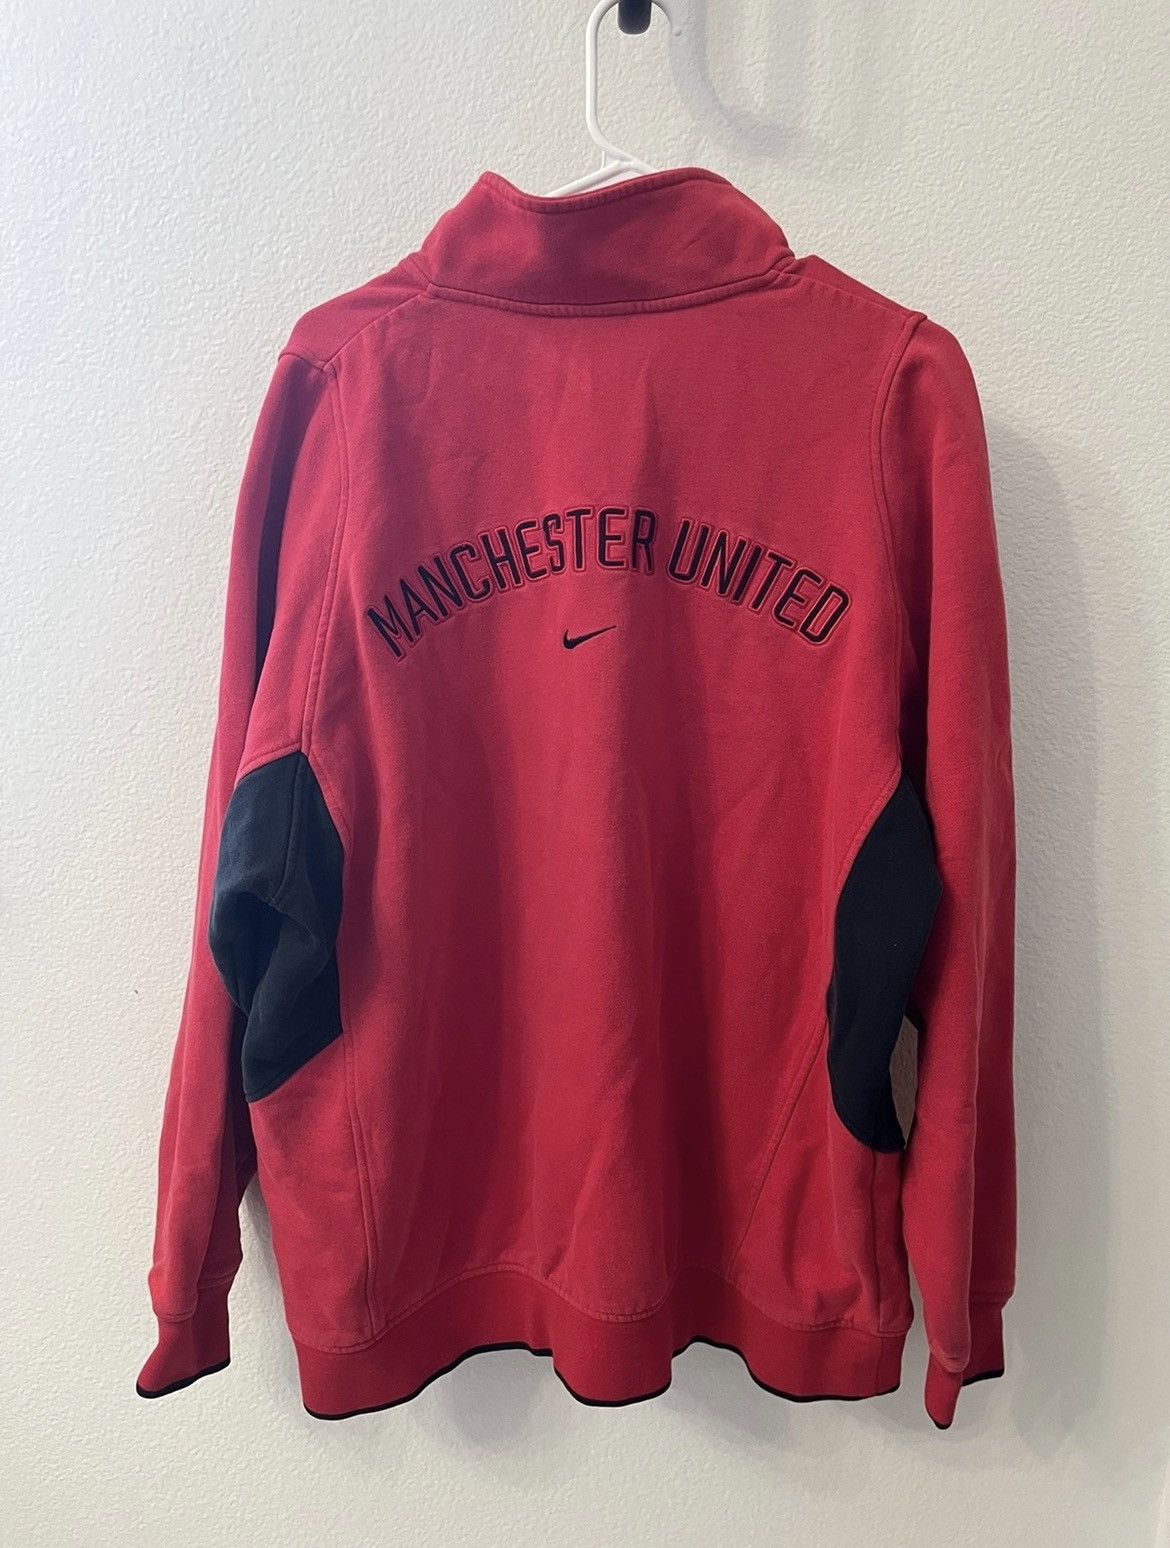 Nike Vintage Nike “Manchester United” Jacket Size US XL / EU 56 / 4 - 6 Preview